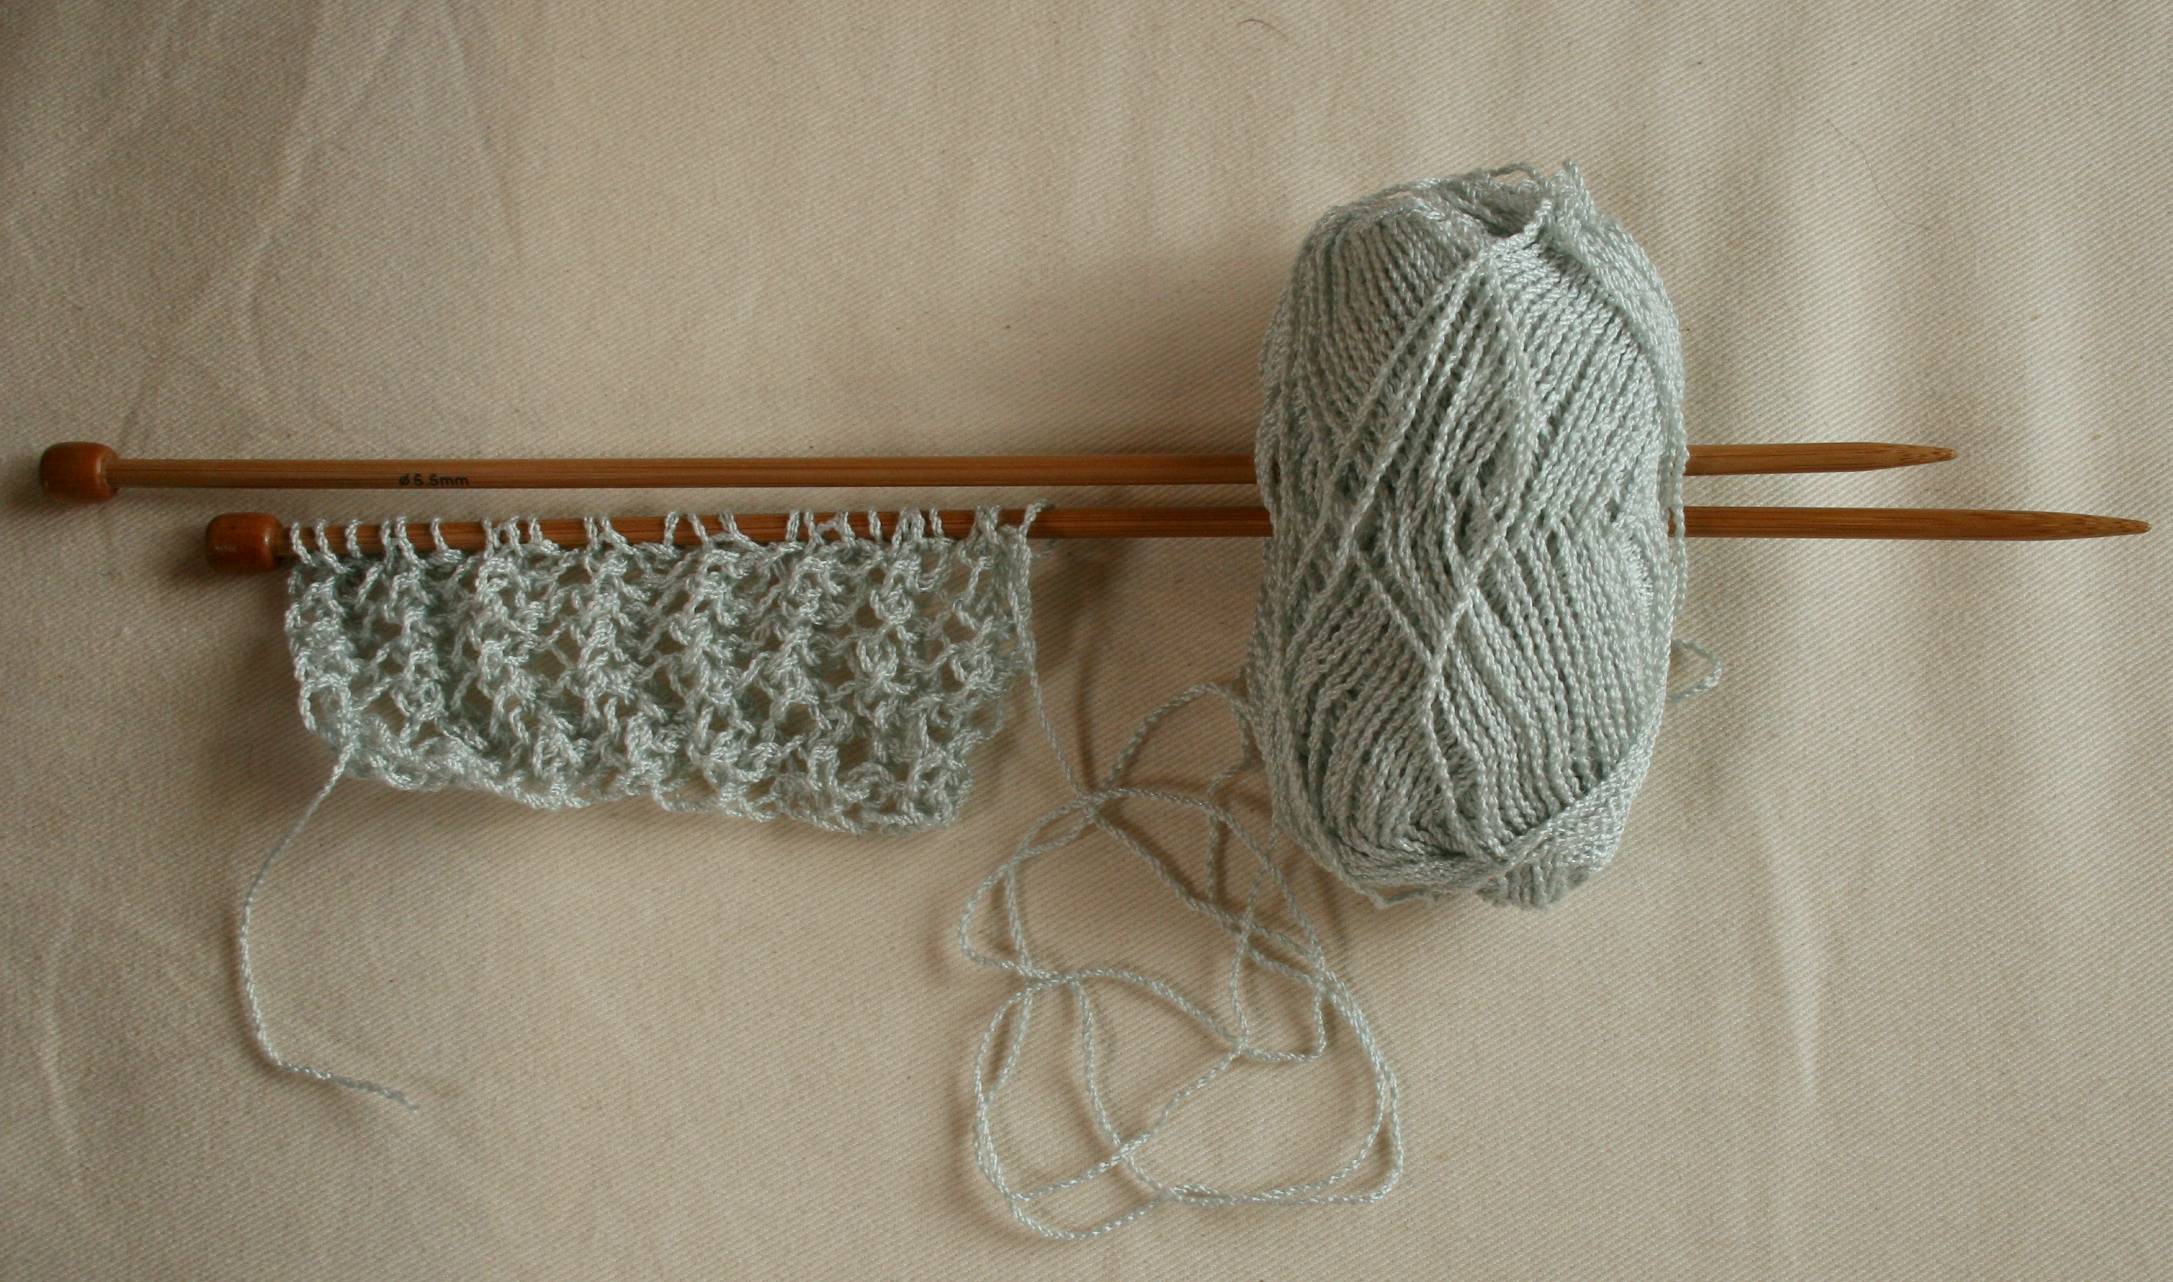 Maggi knits patterns, lornas laces, blue heron yarns, gedifra